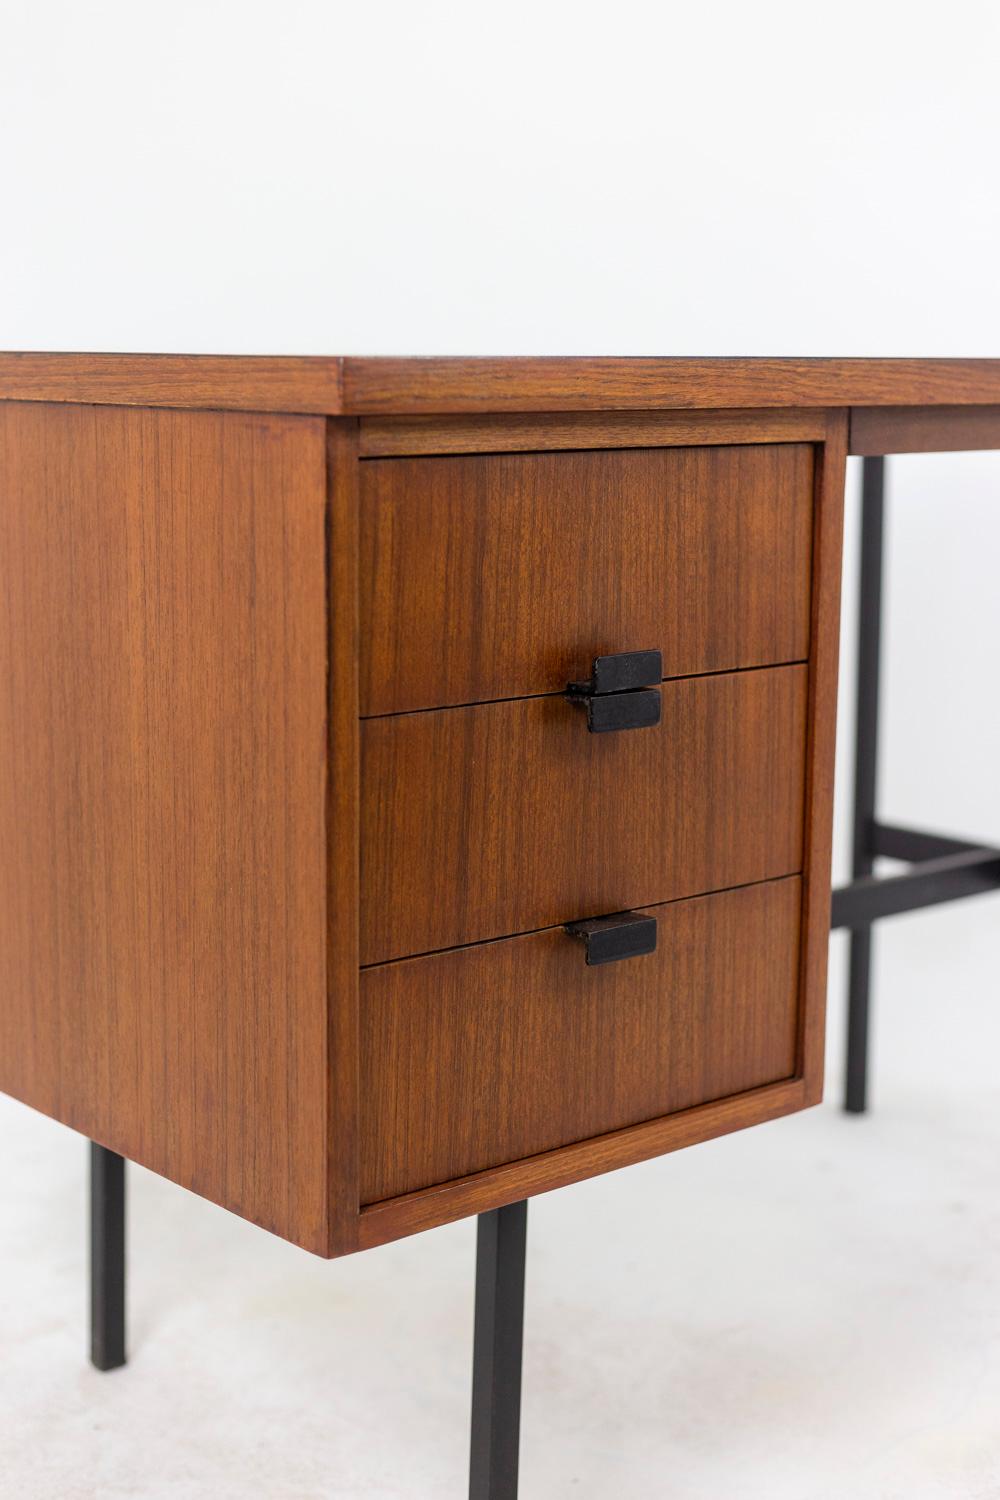 Jacques Hitier for Multiplex, Desk “Multitaple” in Mahogany, 1950s For Sale 1